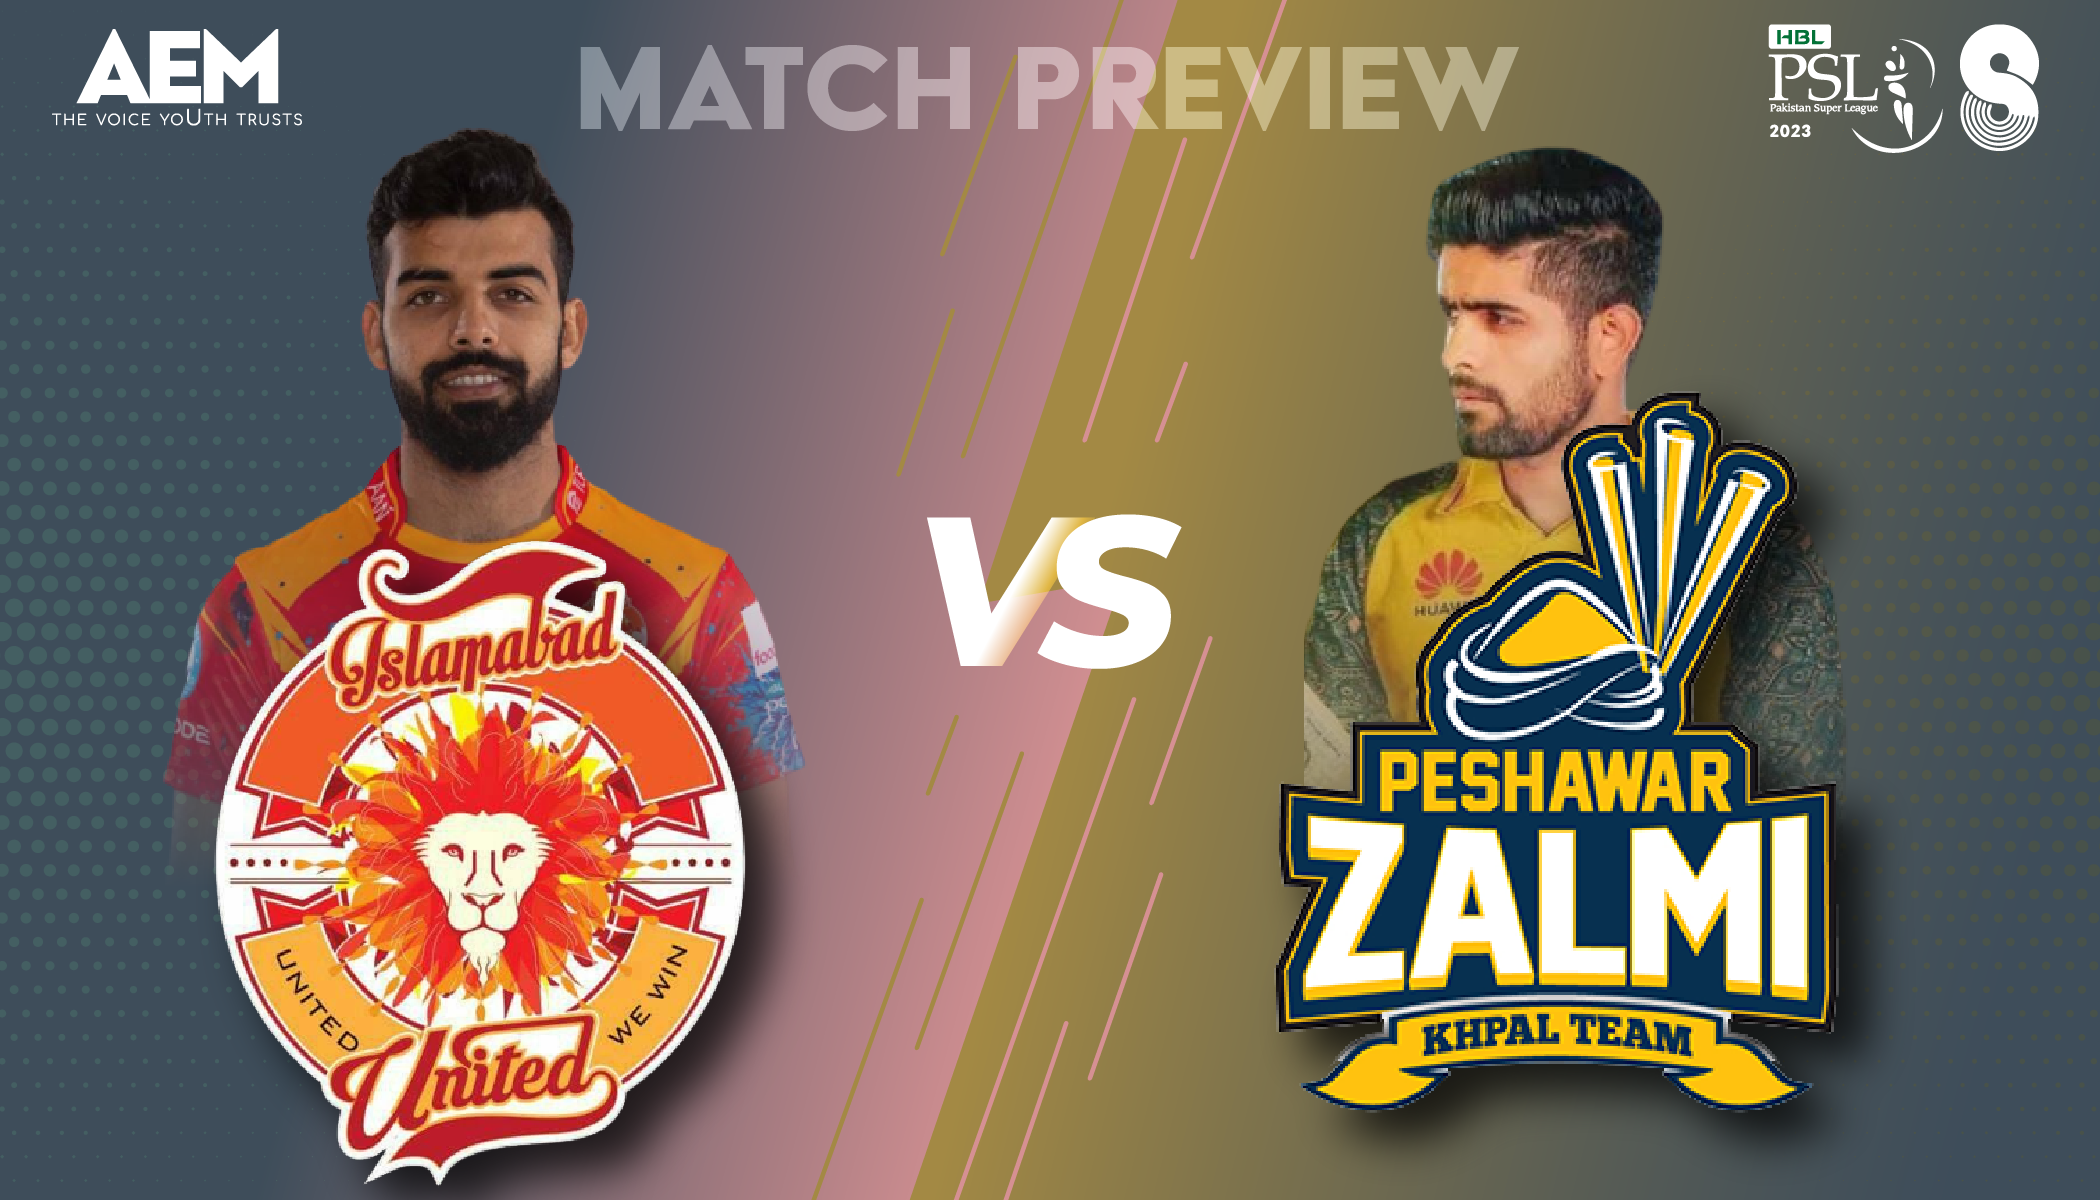 Match Preview of Islamabad United VS Peshawar Zalmi